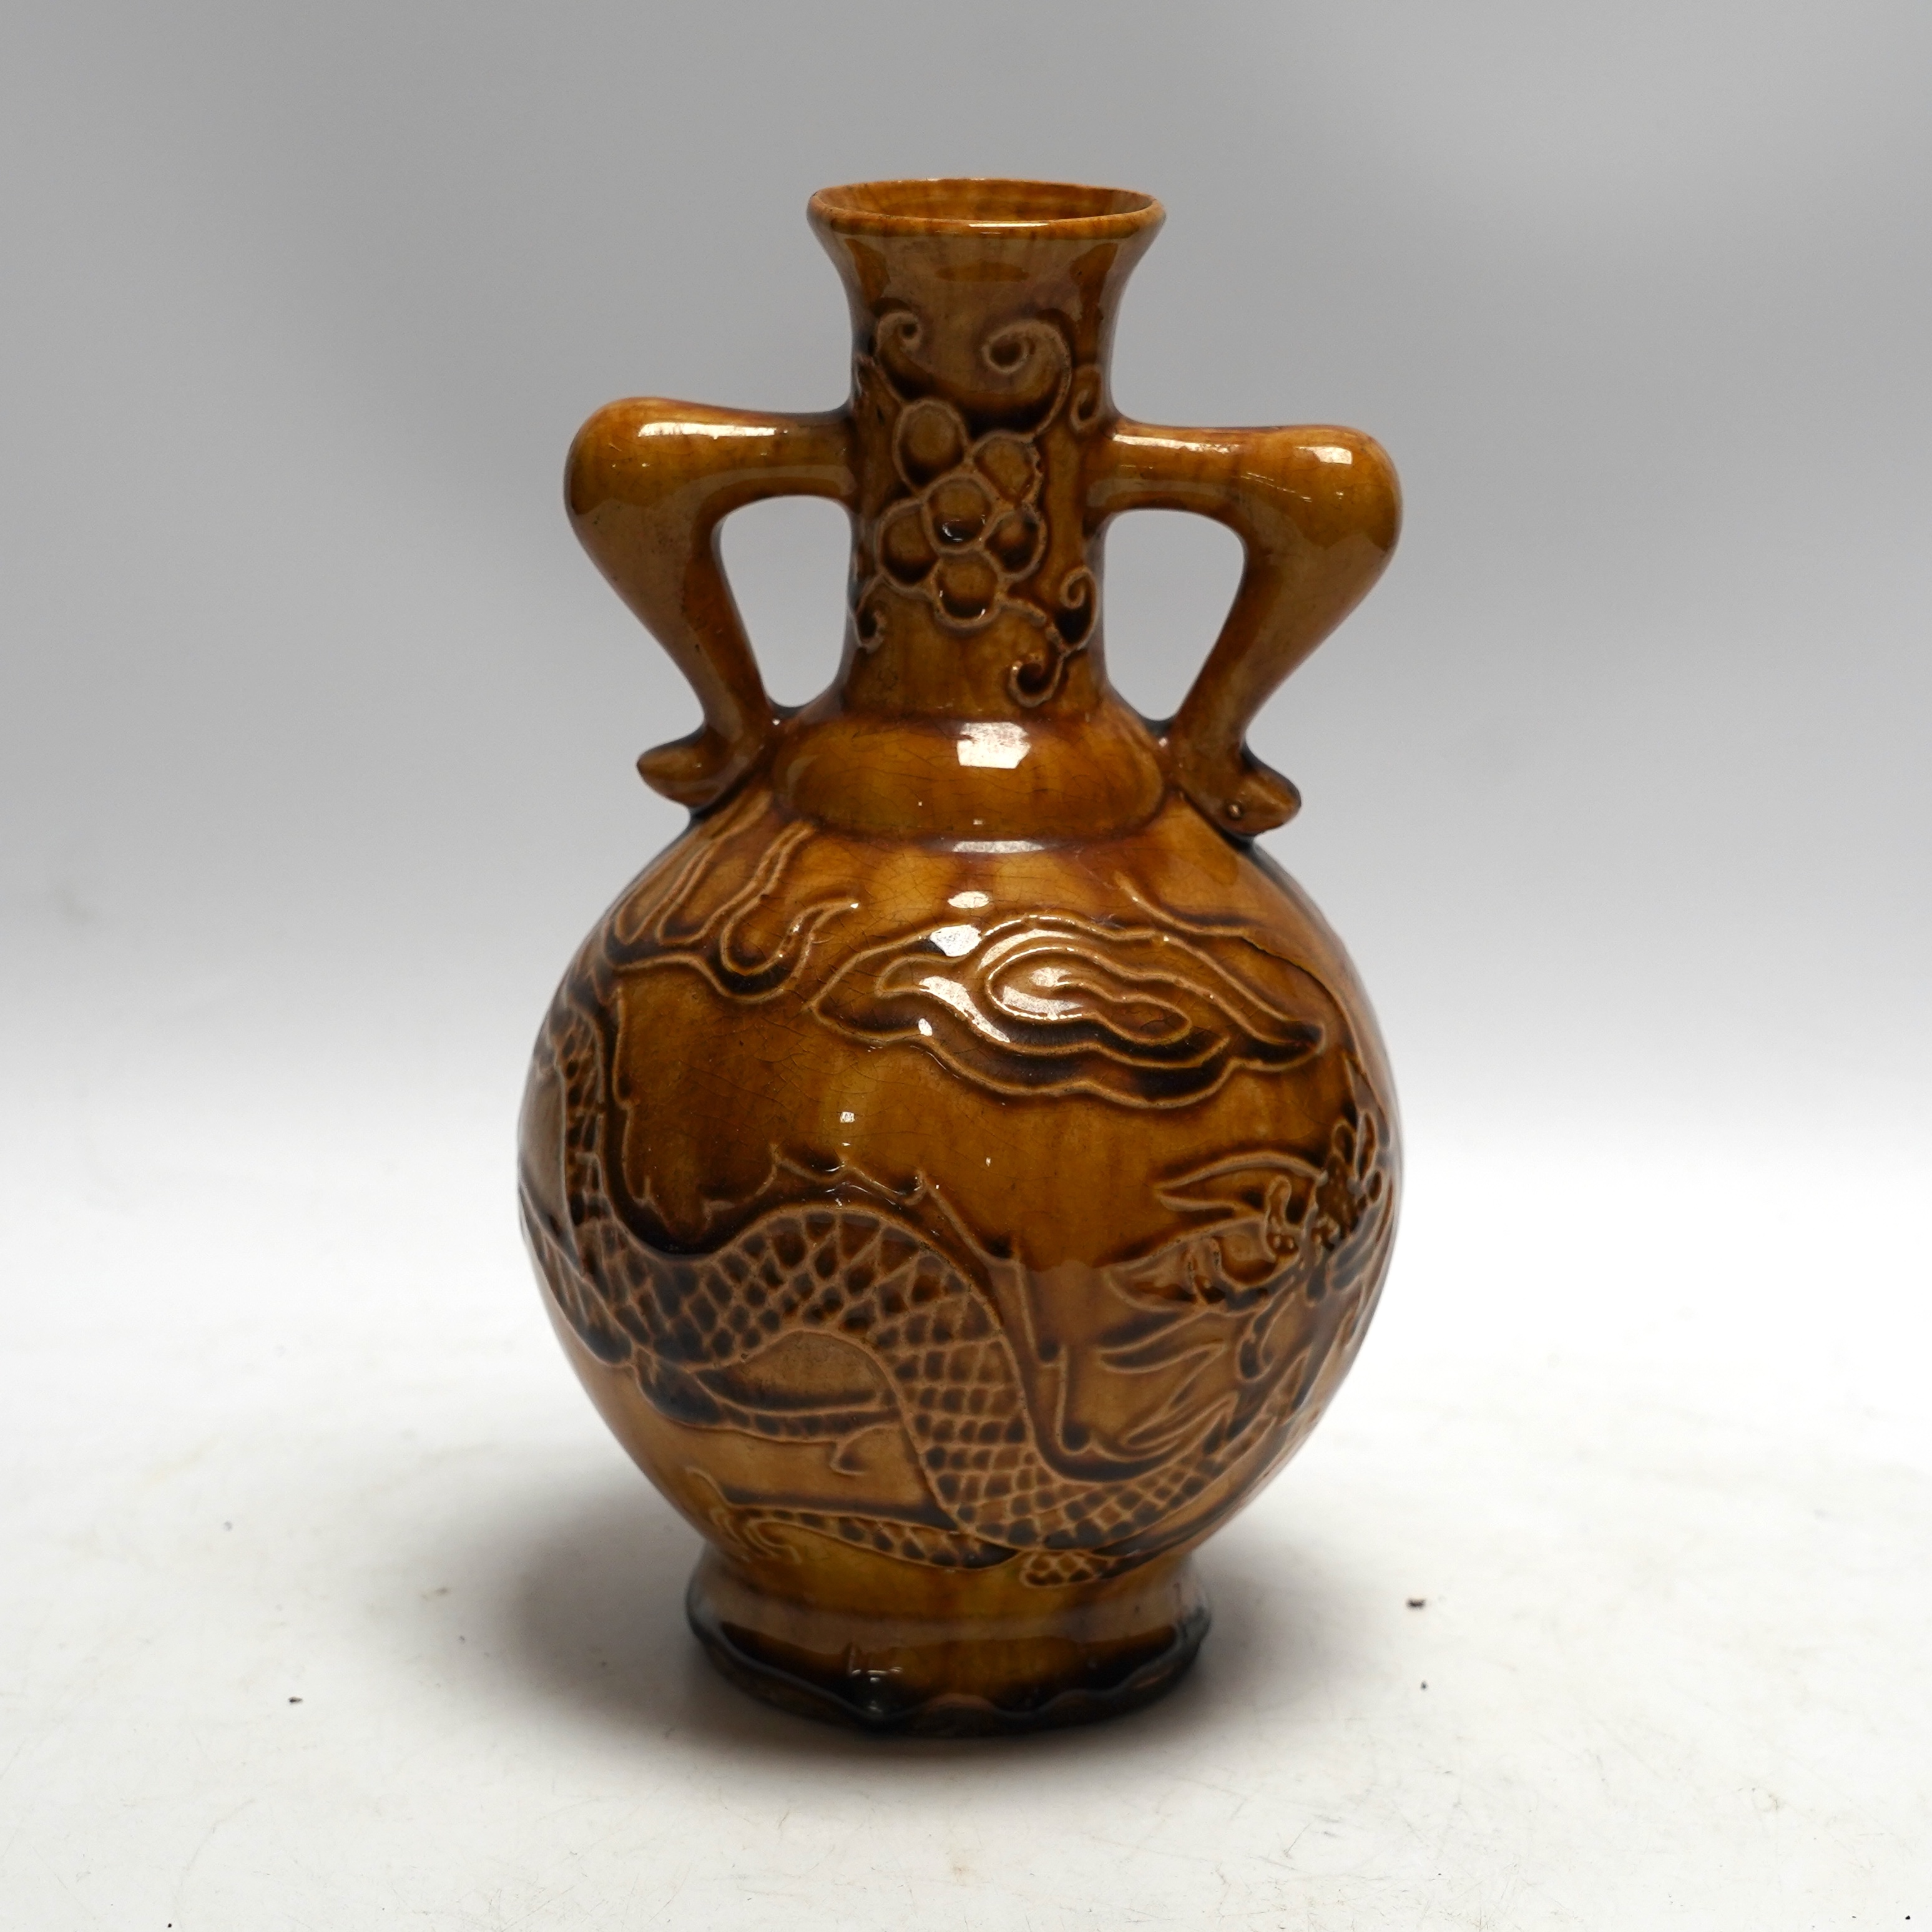 An 18th century style Chinese ochre glazed vase, 22.5cm